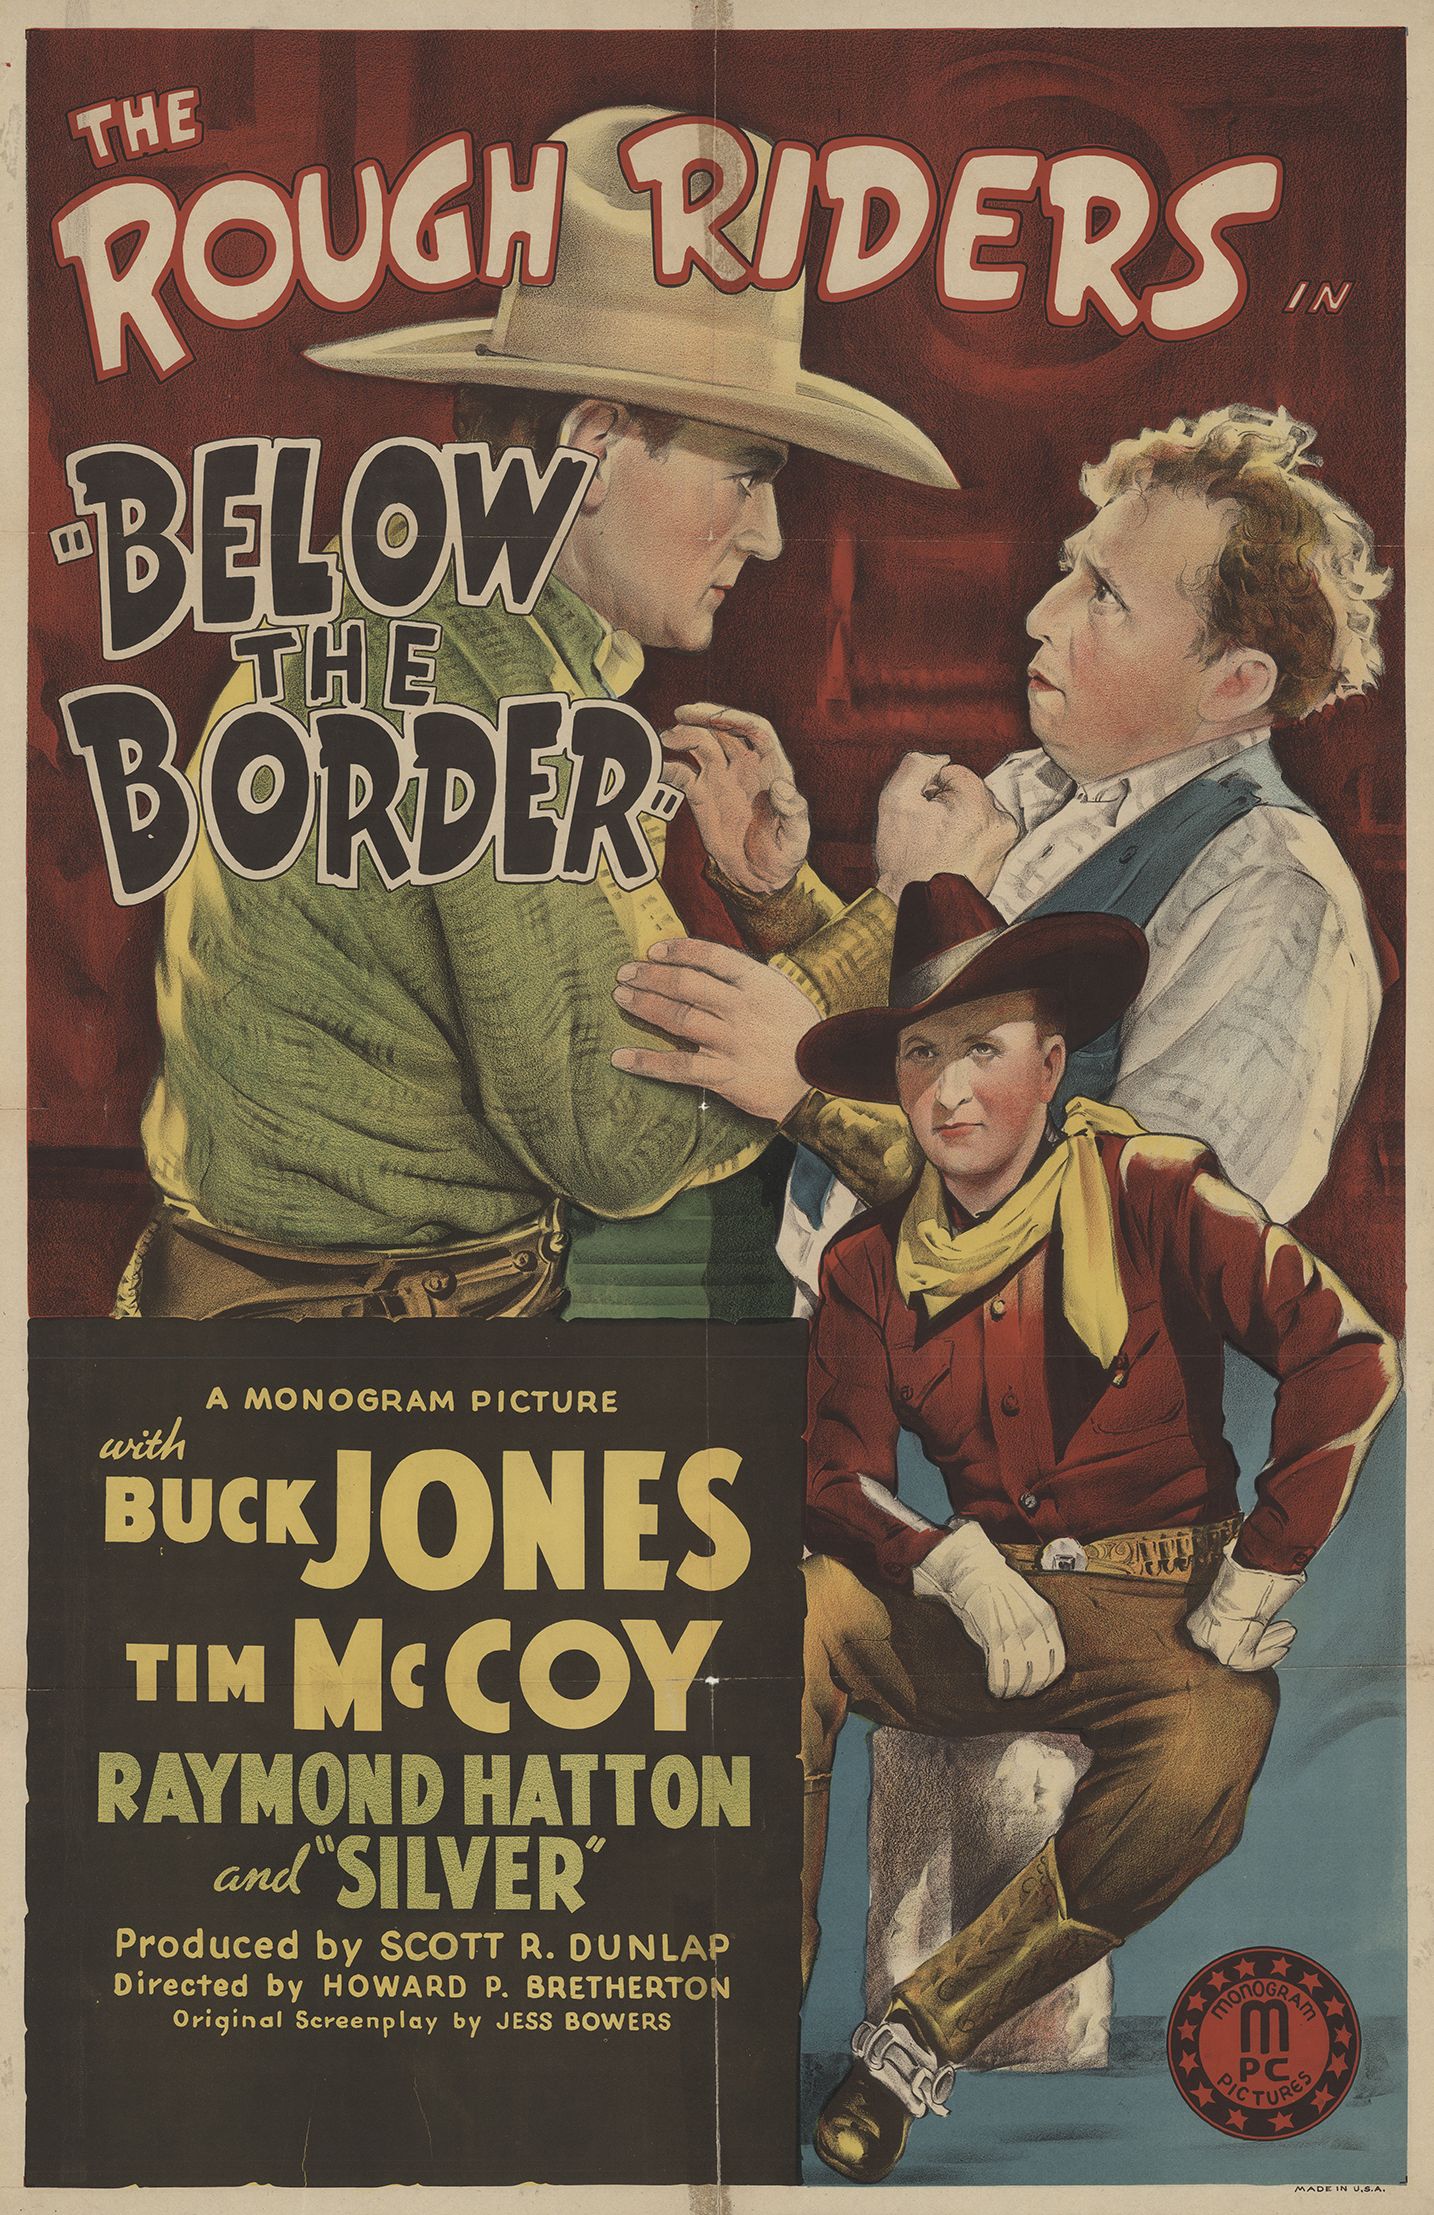 BELOW THE BORDER (1942)